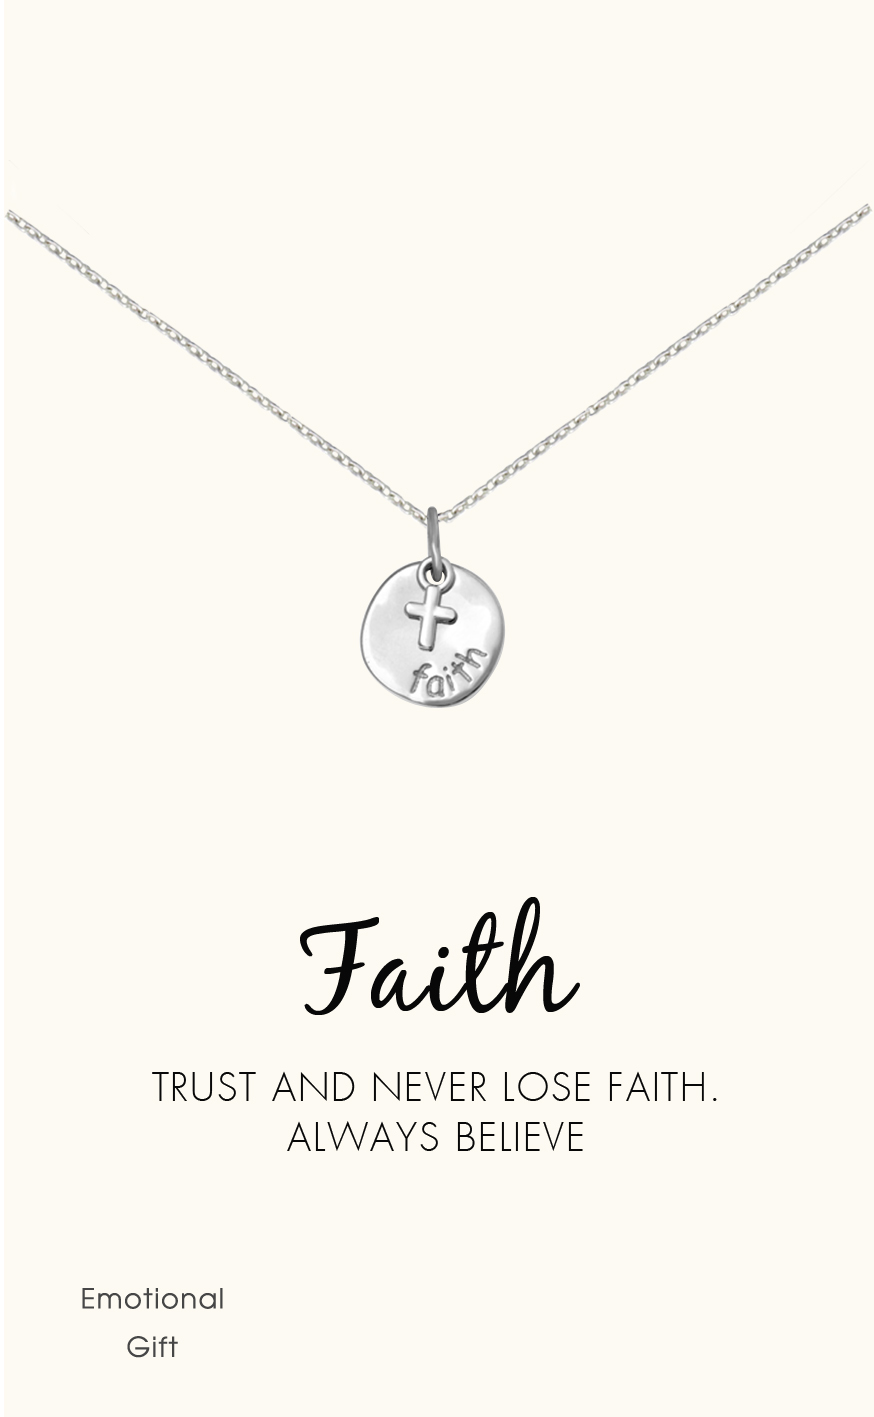 The cross faith silver pendant